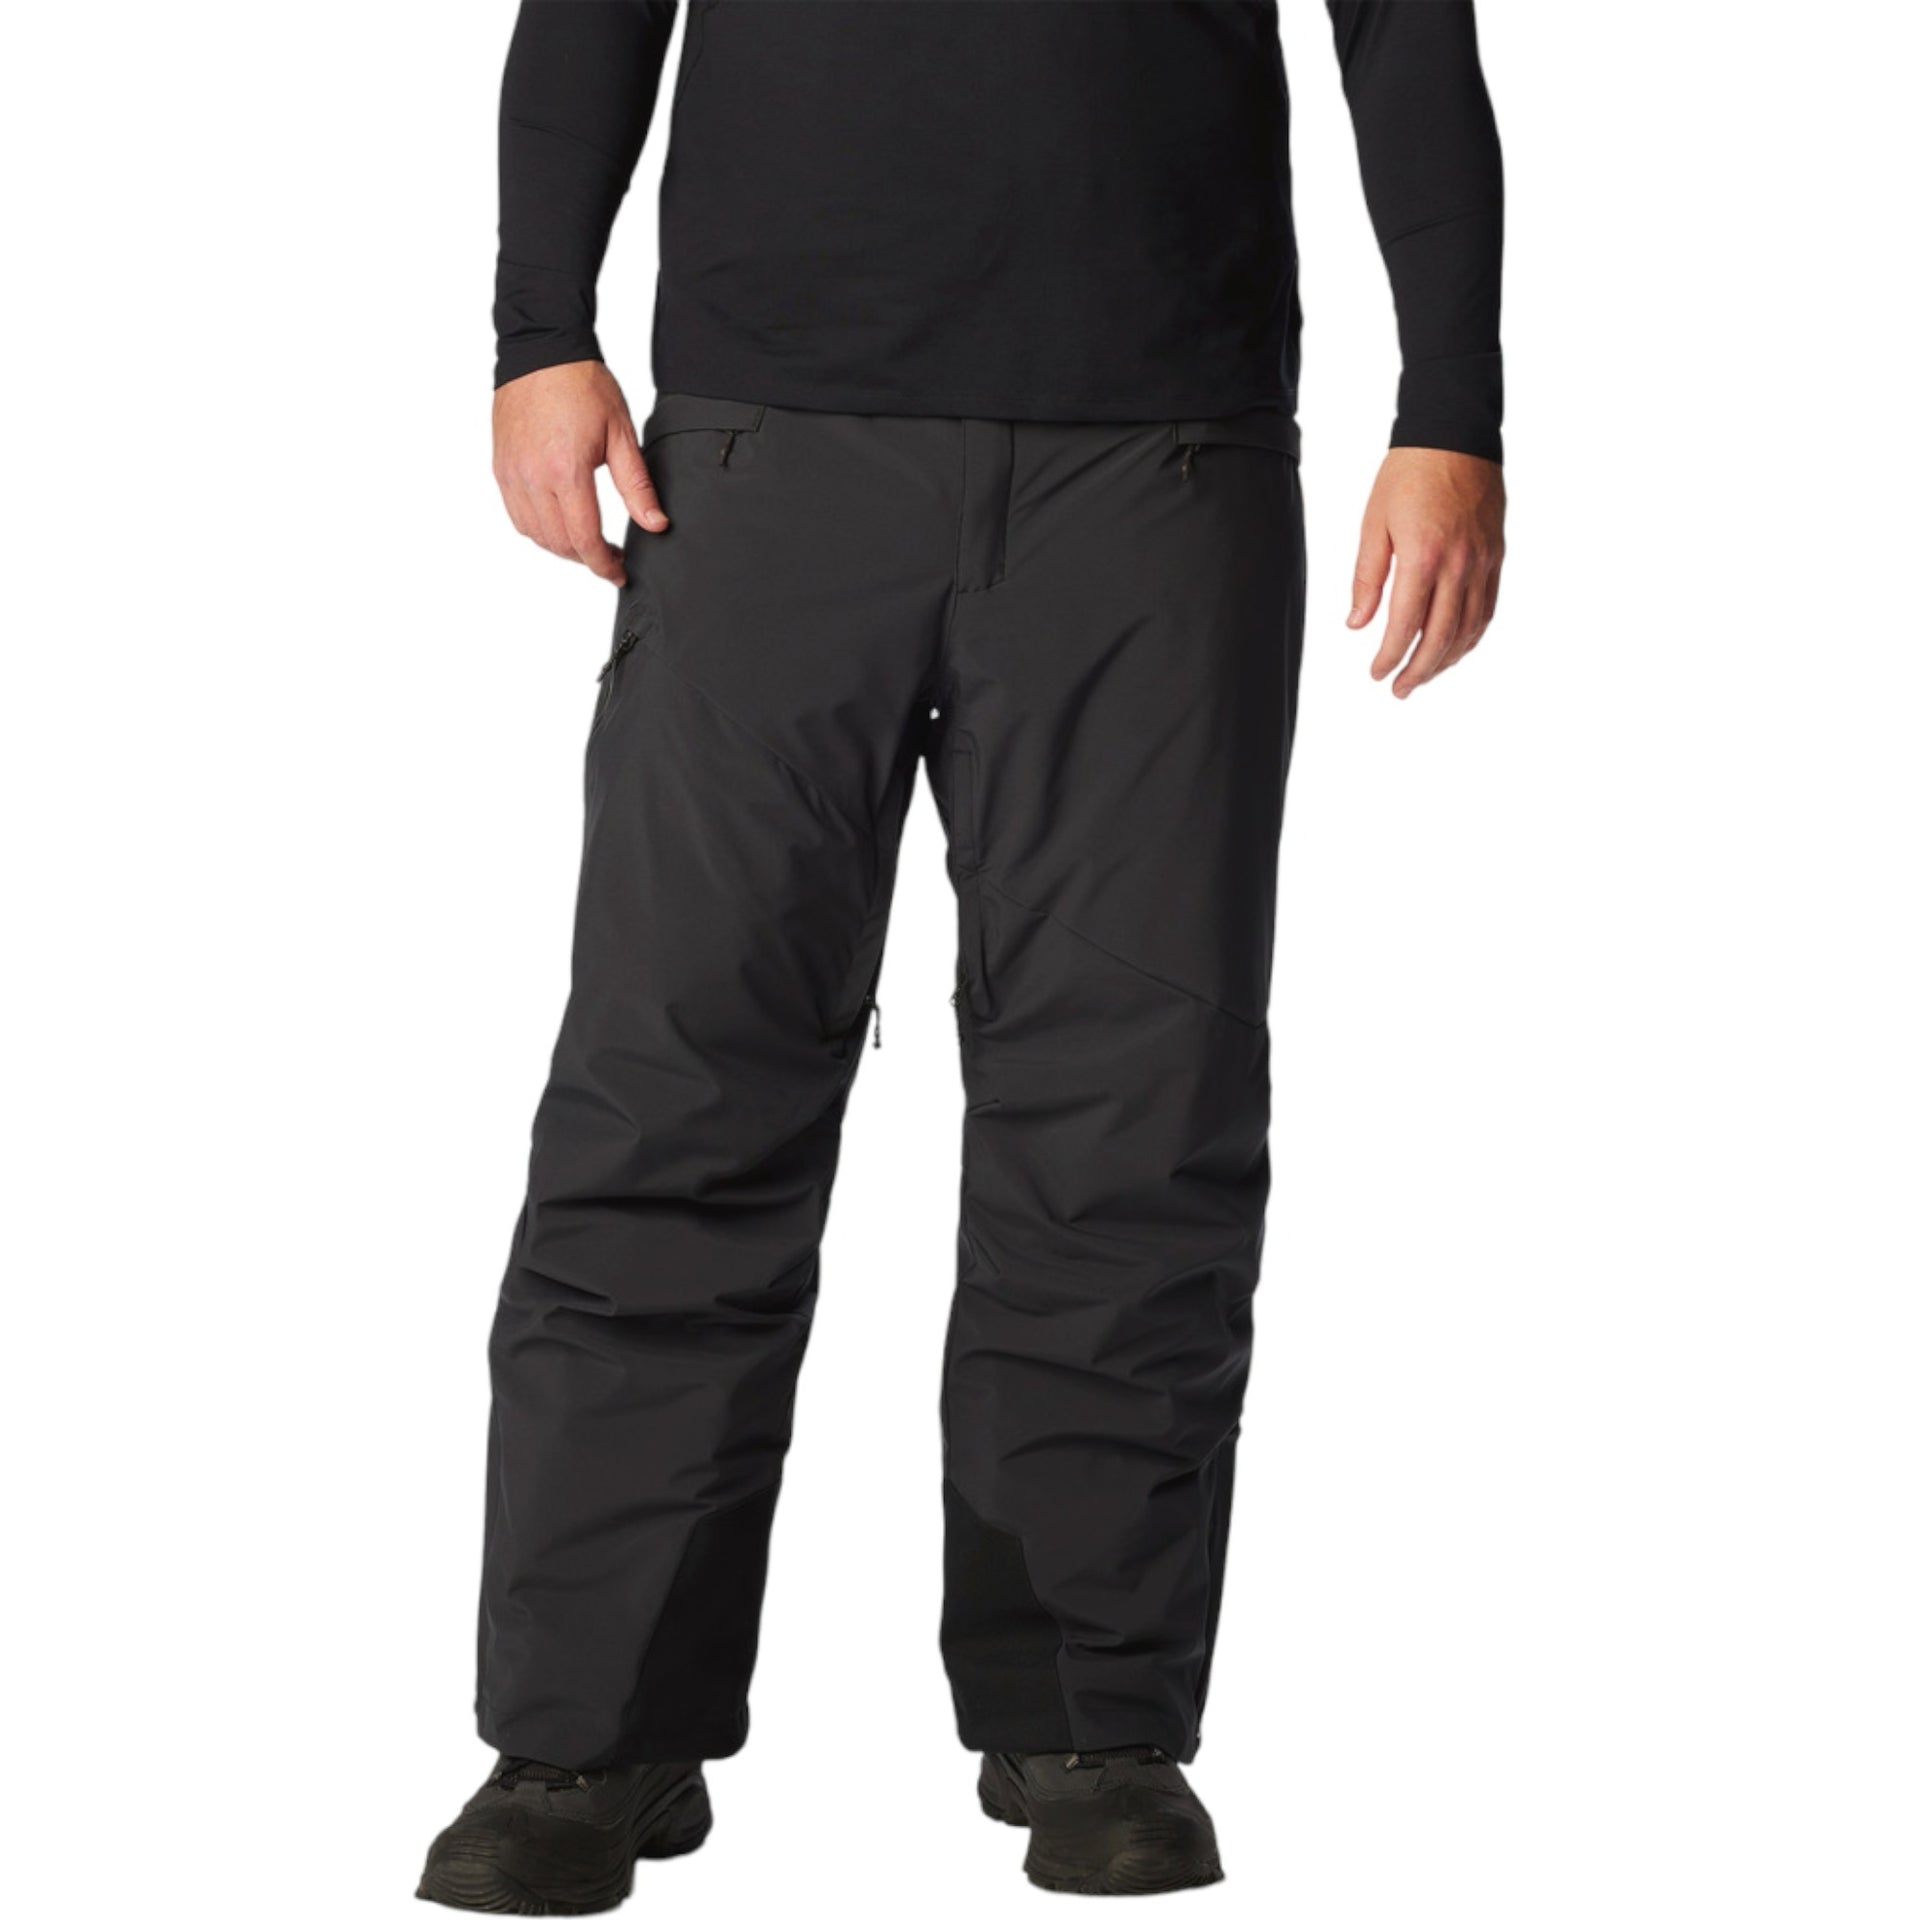 Item 910639 - Columbia Free Climb - Men's Ski Pants - Size XL